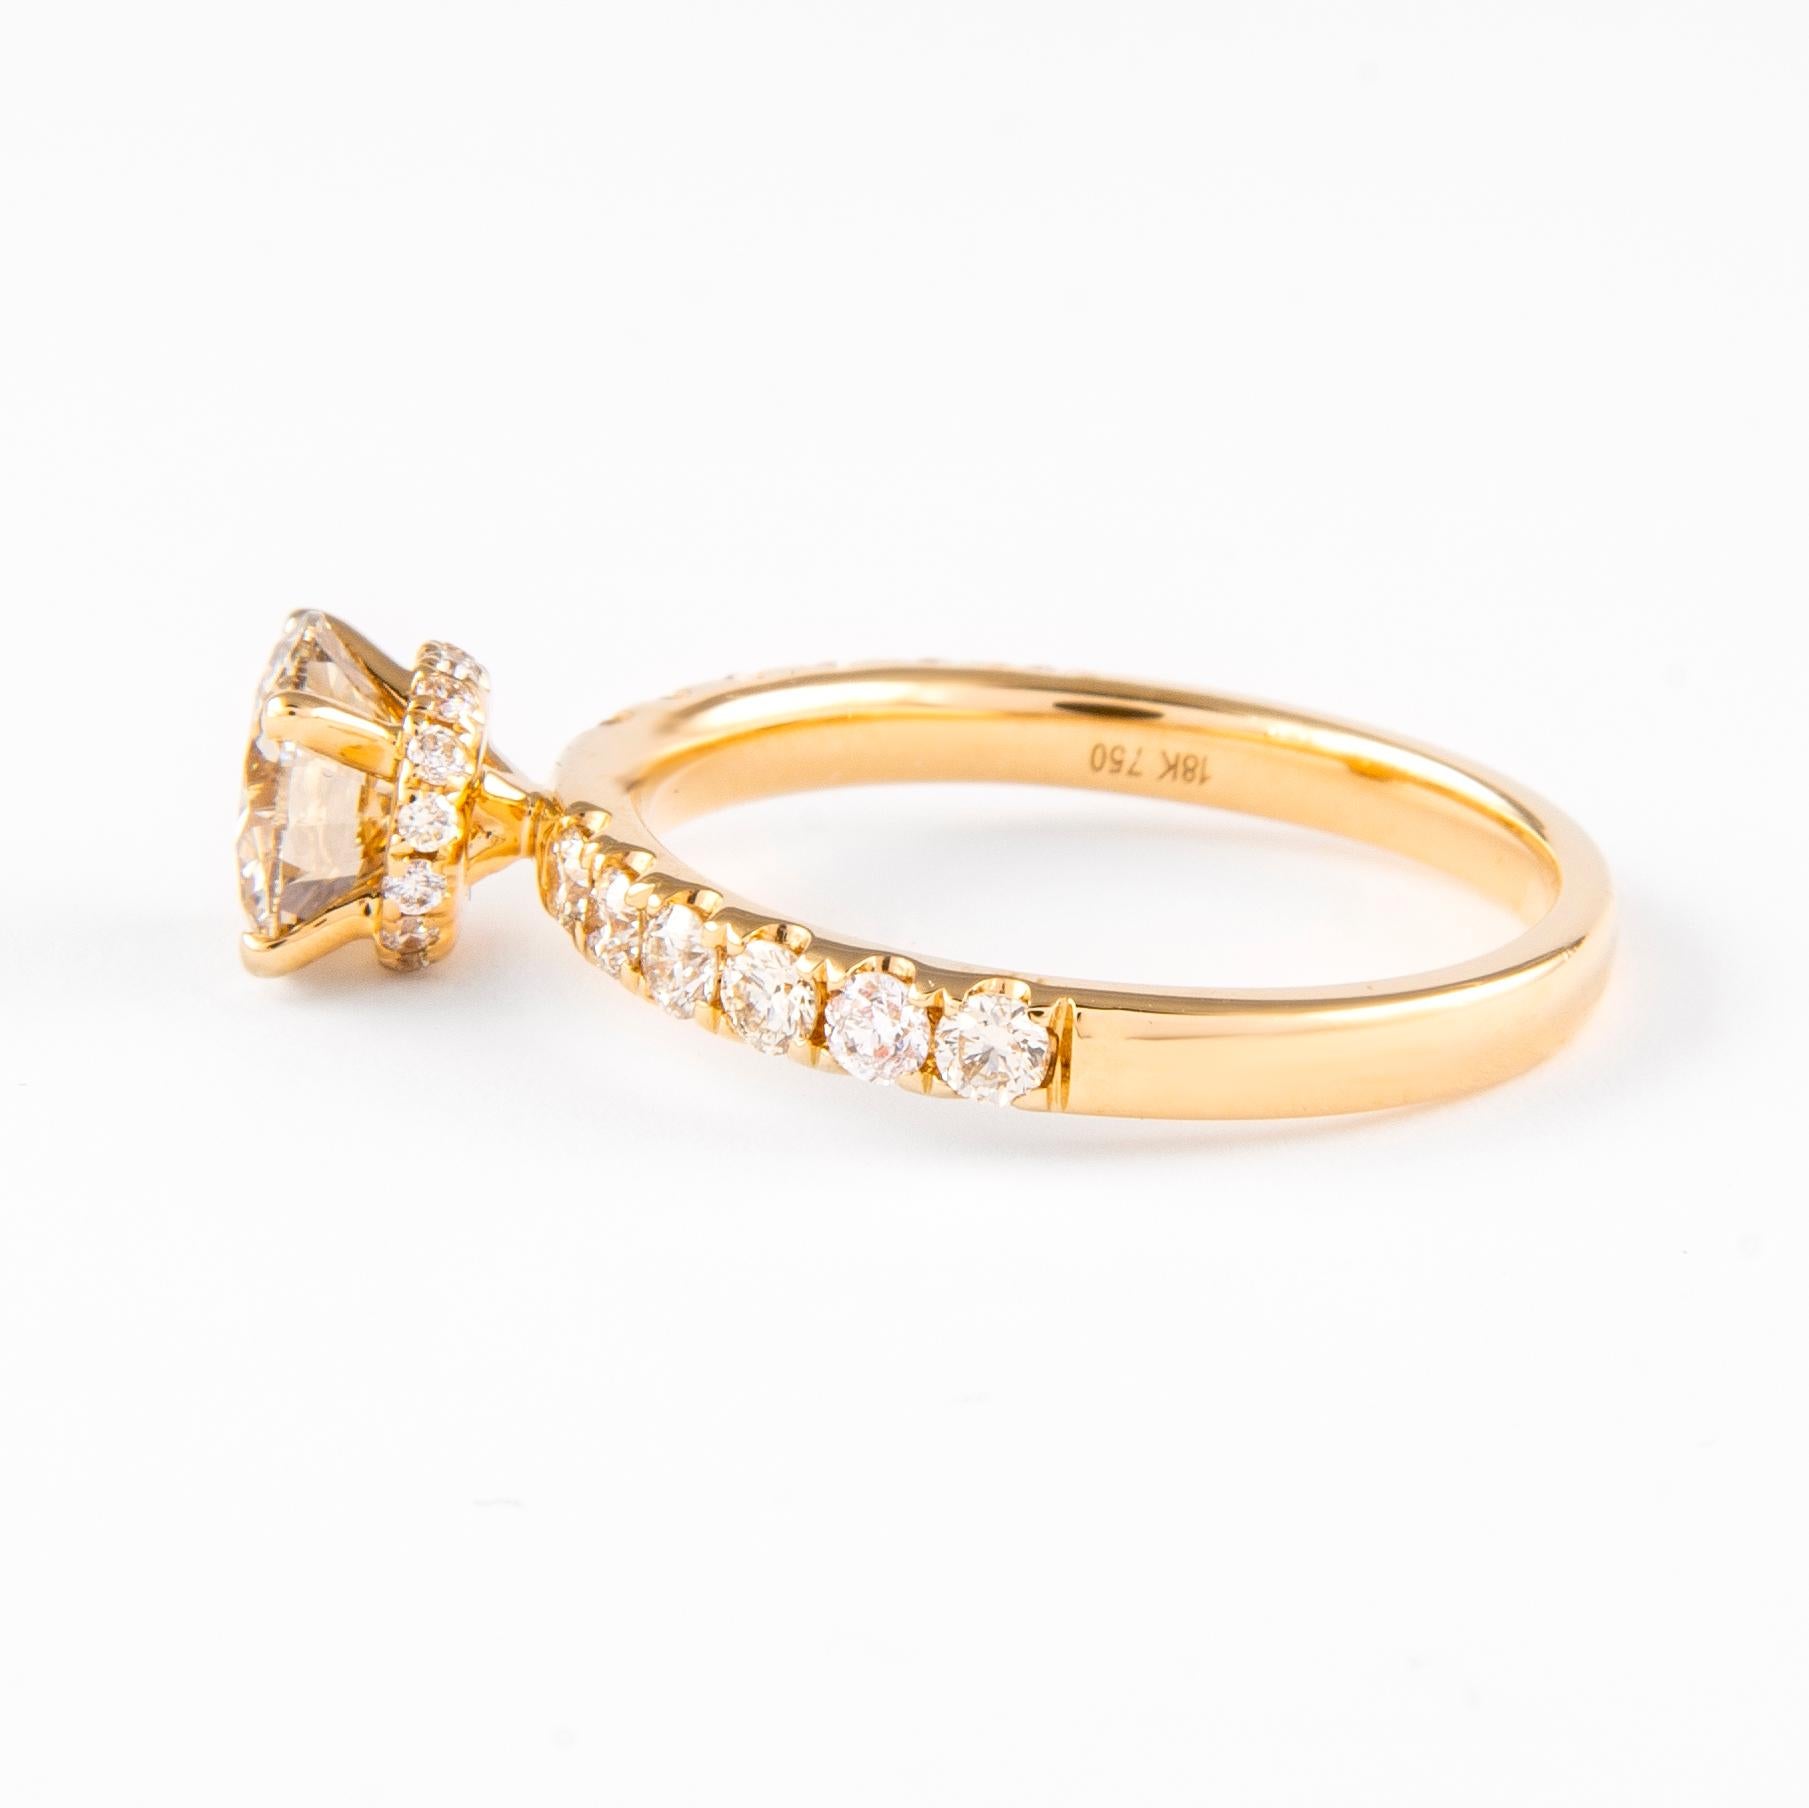 Contemporary 1.58 Carat Round Brilliant Diamond Ring 18 Karat Yellow Gold For Sale